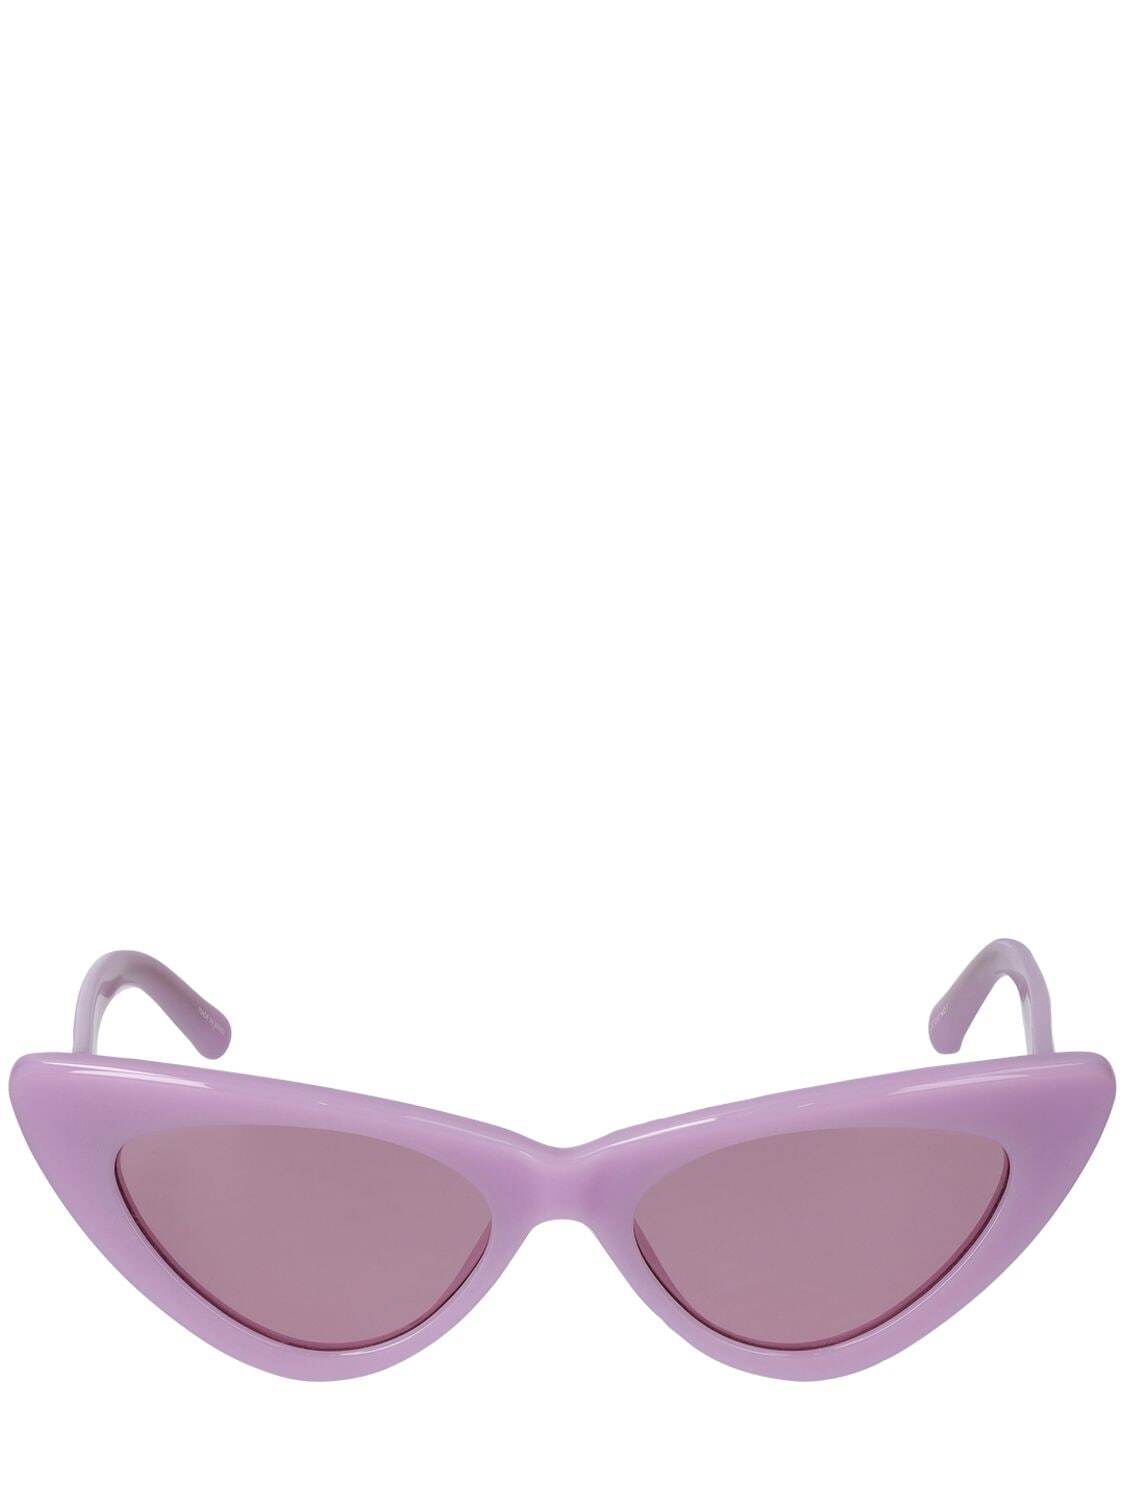 THE ATTICO Dora Cat-eye Acetate Sunglasses in pink